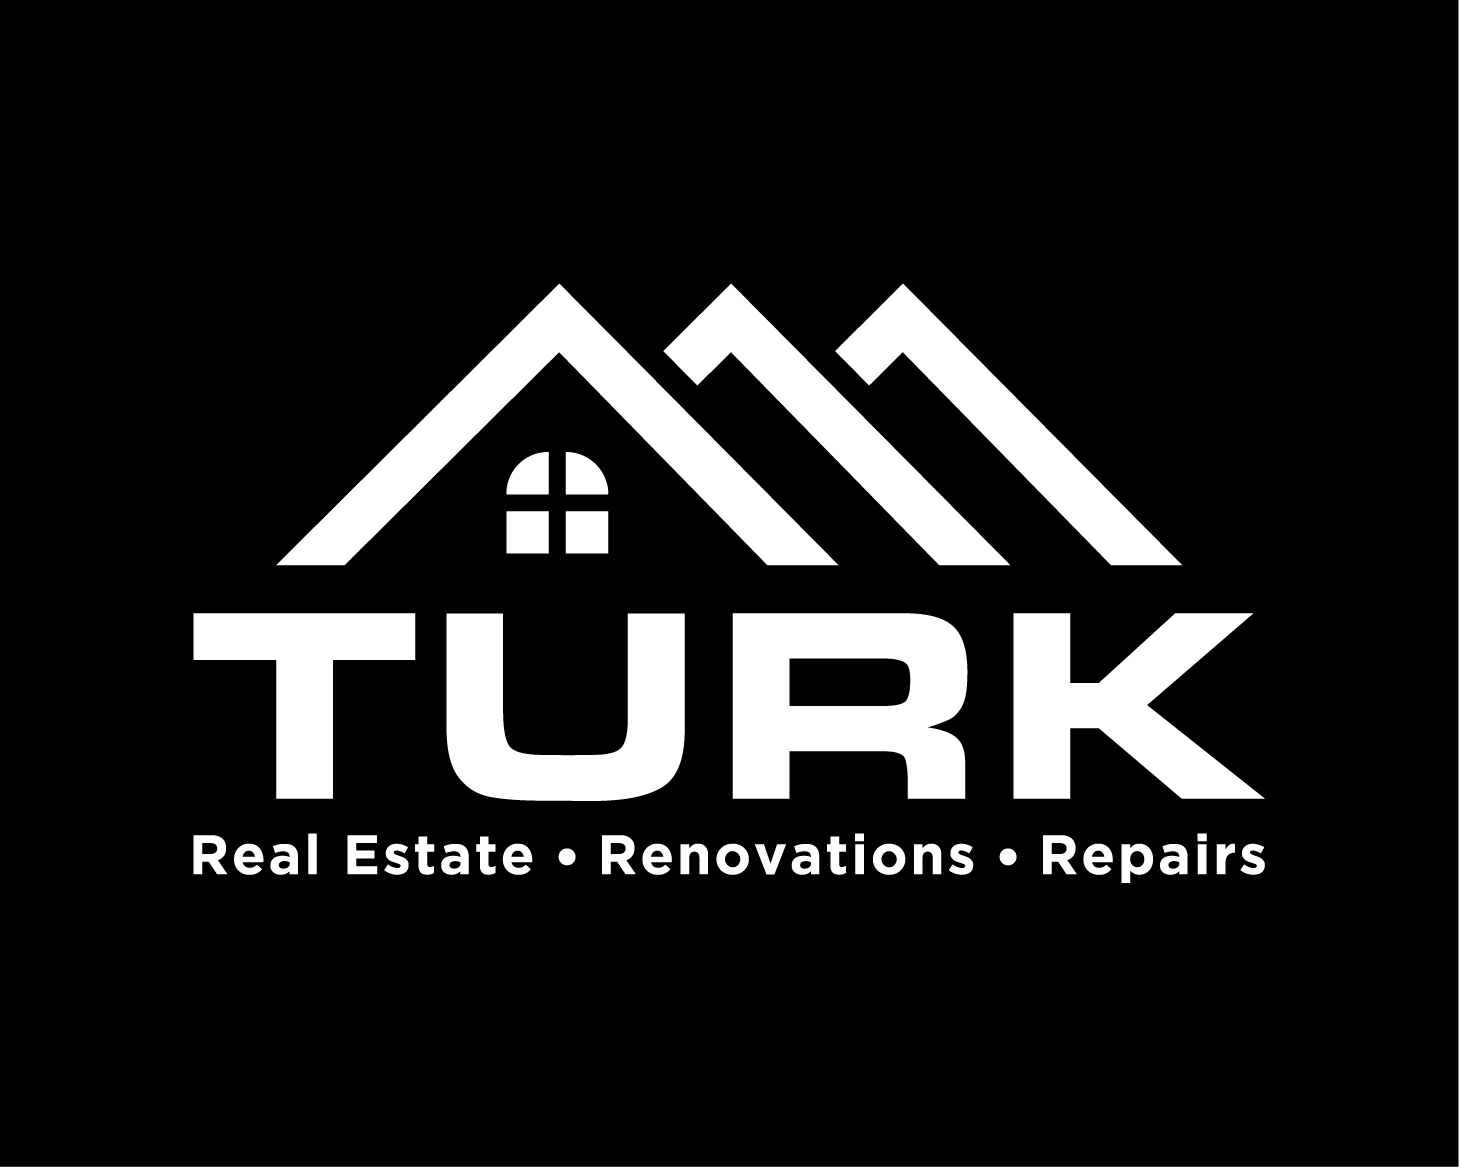 Steve Turk Construction Logo